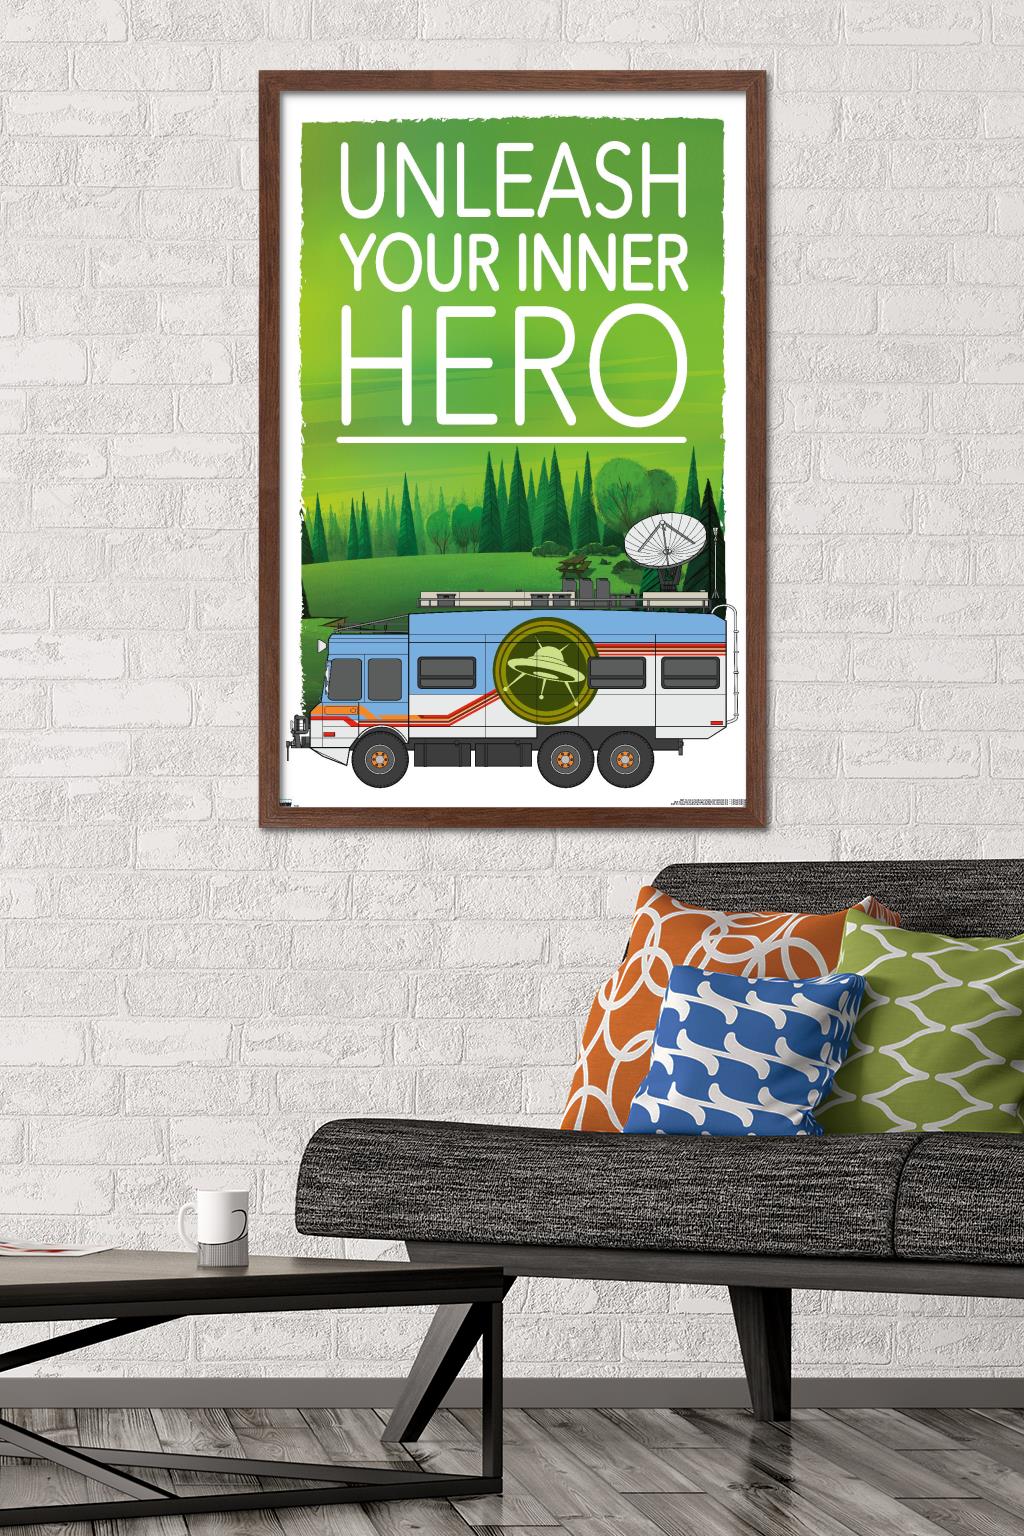 Ben 10 - Go Hero Wall Poster, 22.375" x 34", Framed - image 2 of 5